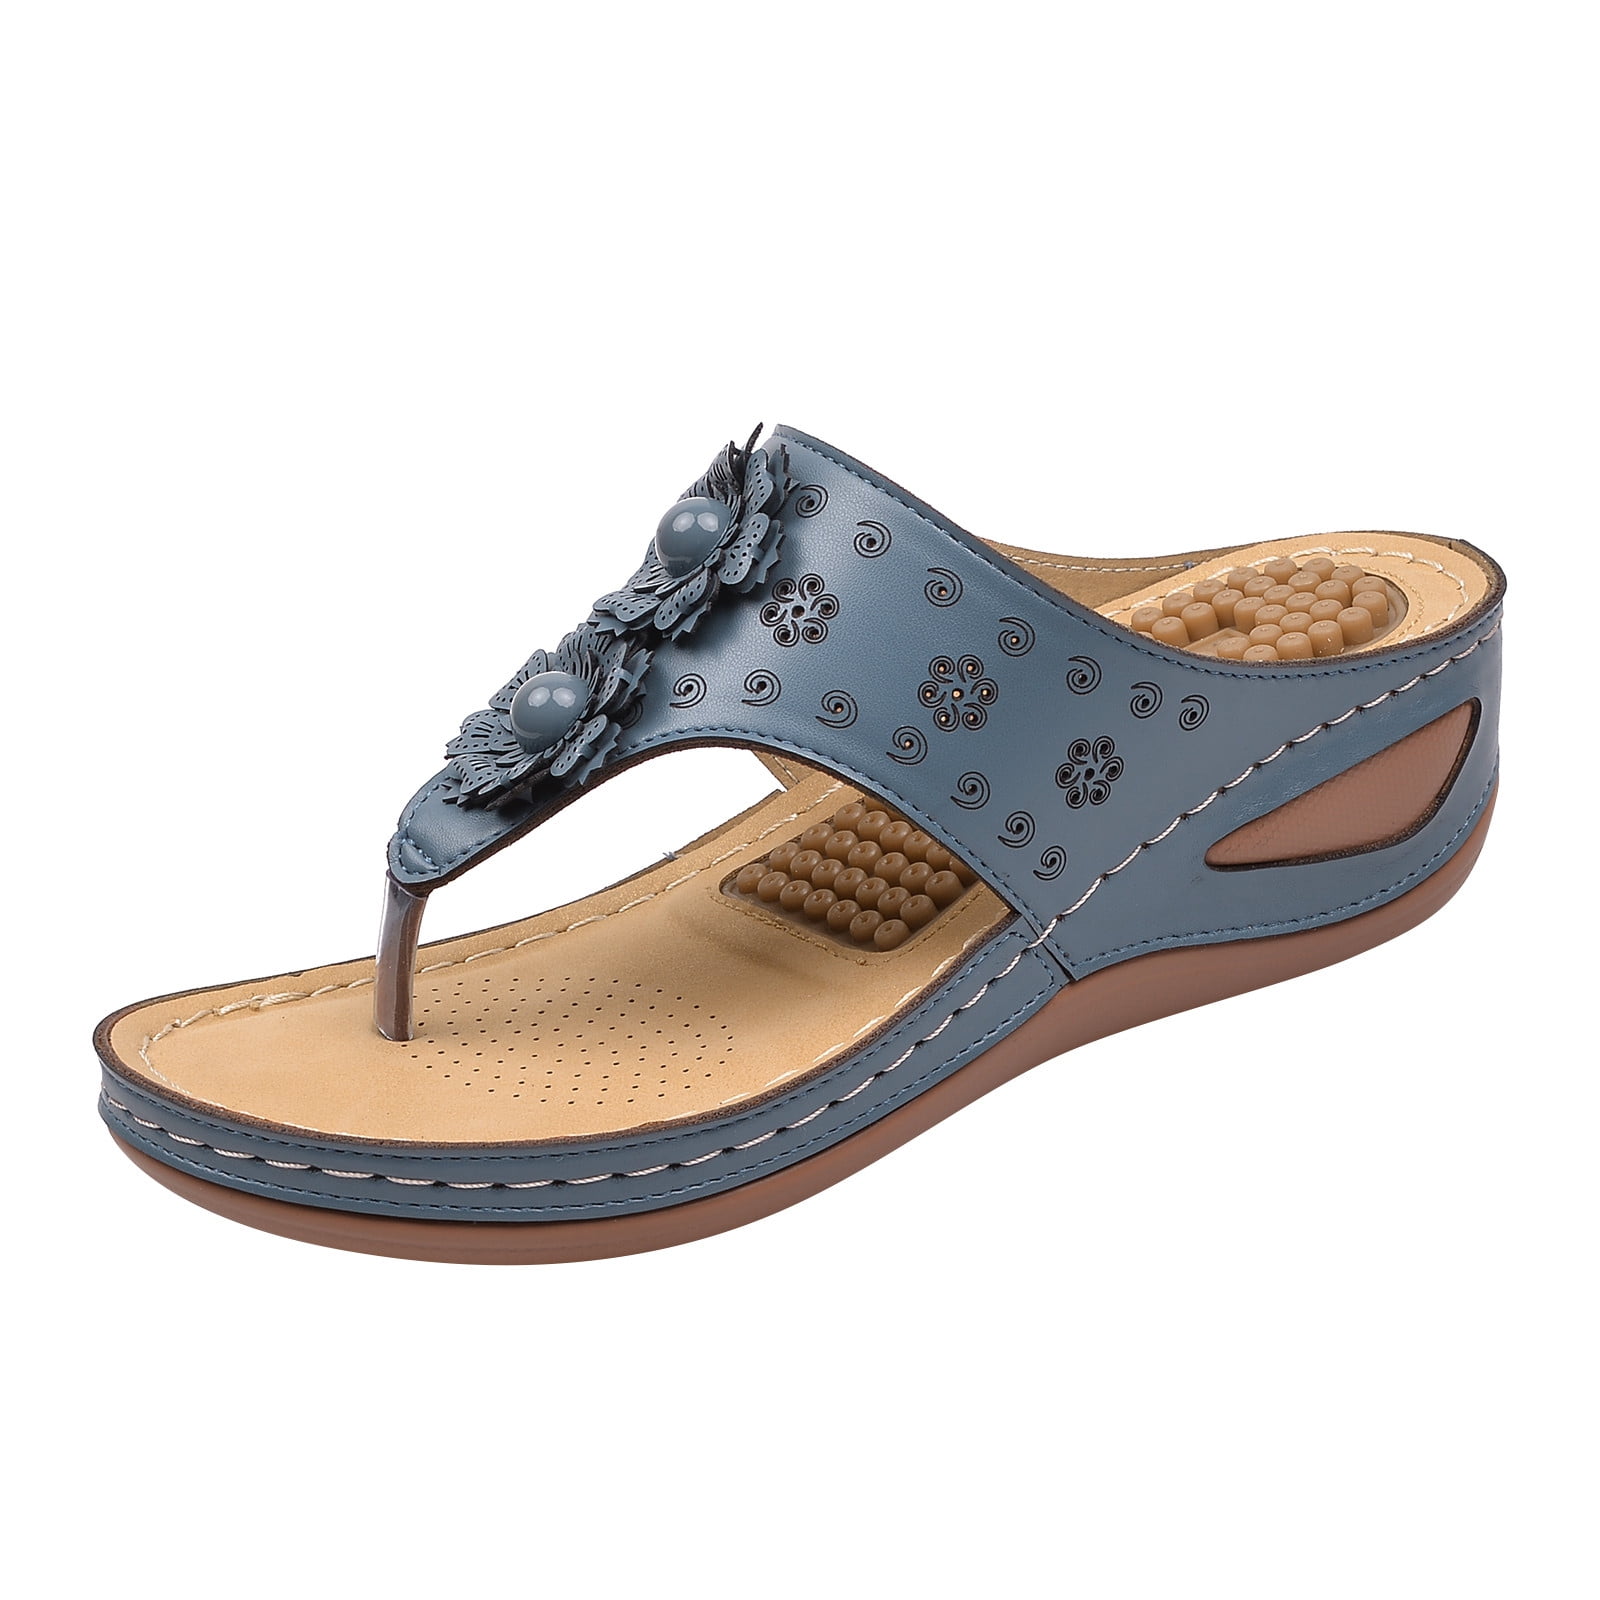  Gibobby Platform Sandals Flat Wedge Womens Summer